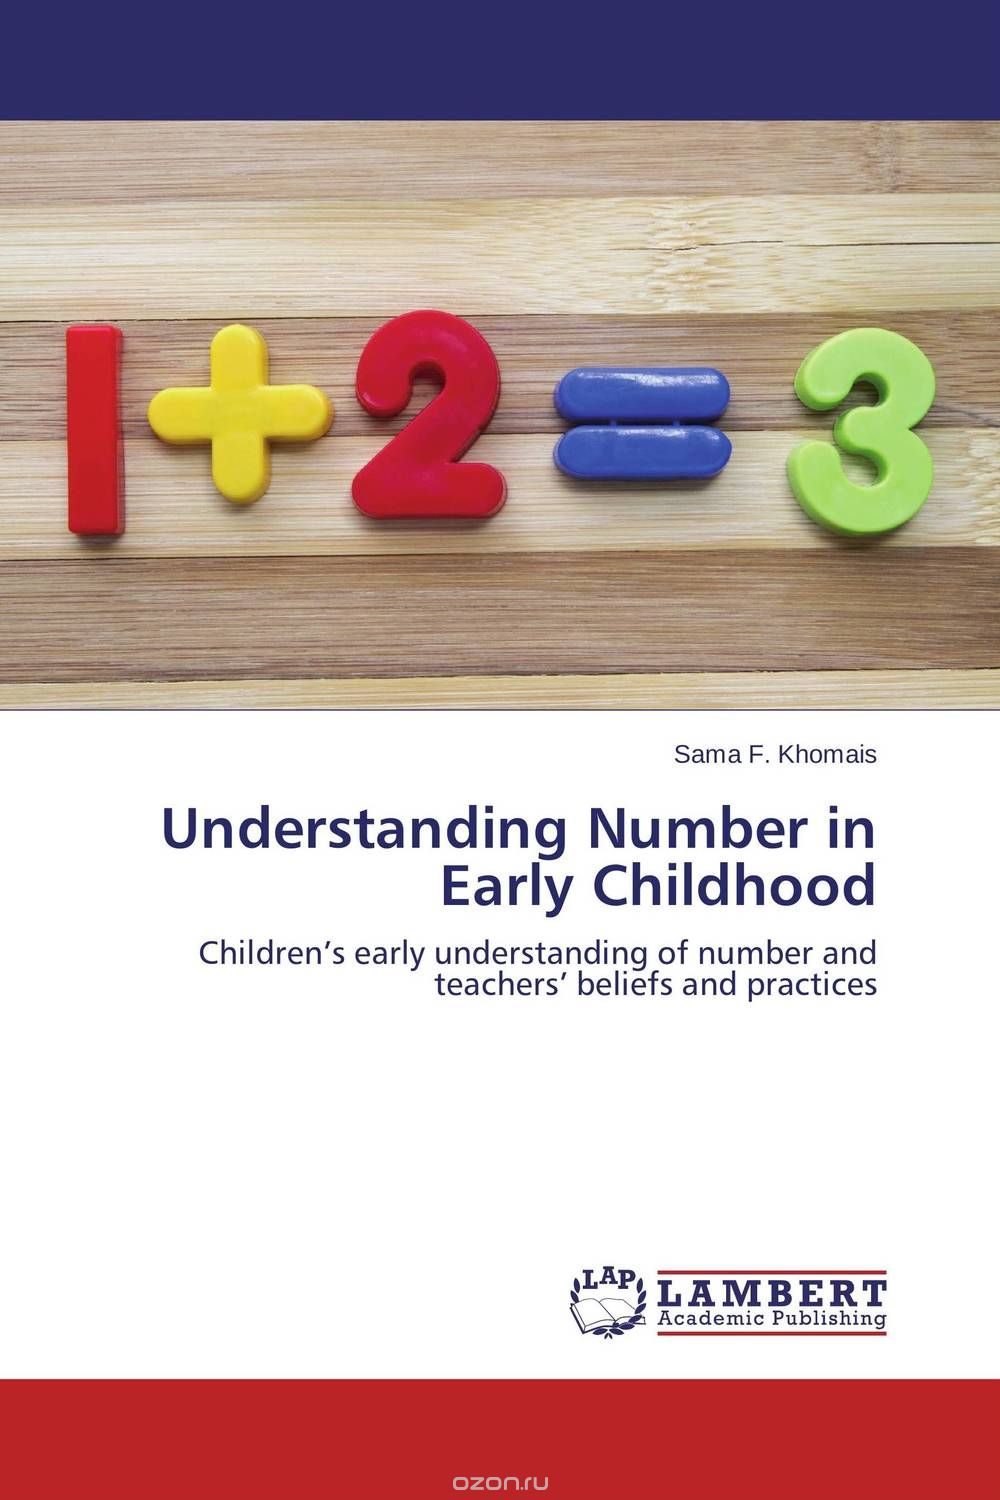 Скачать книгу "Understanding Number in Early Childhood"